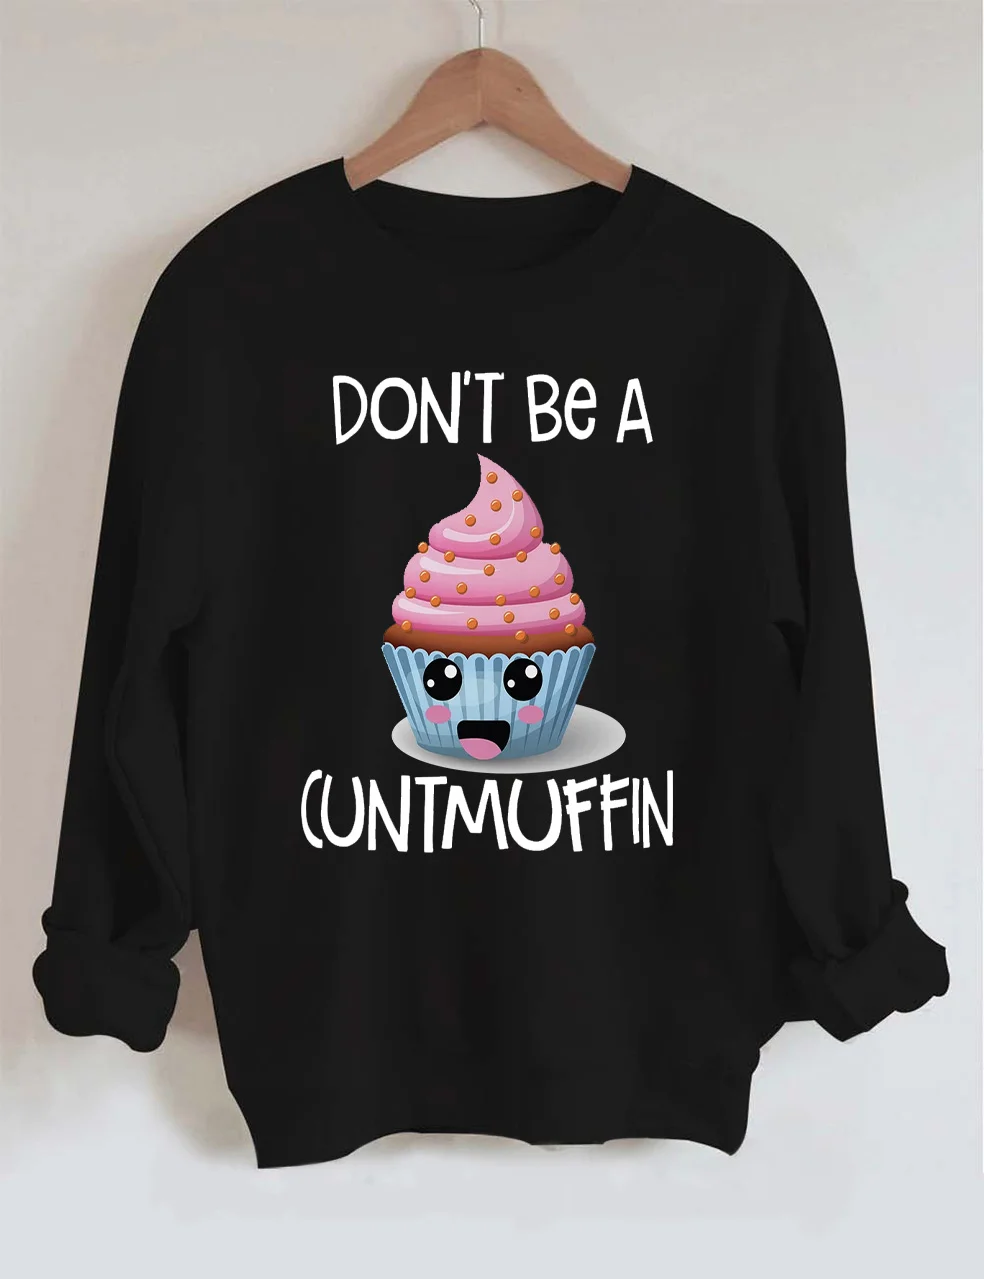 Don't Be A Cuntmuffin/Twatwaffle Sweatshirt